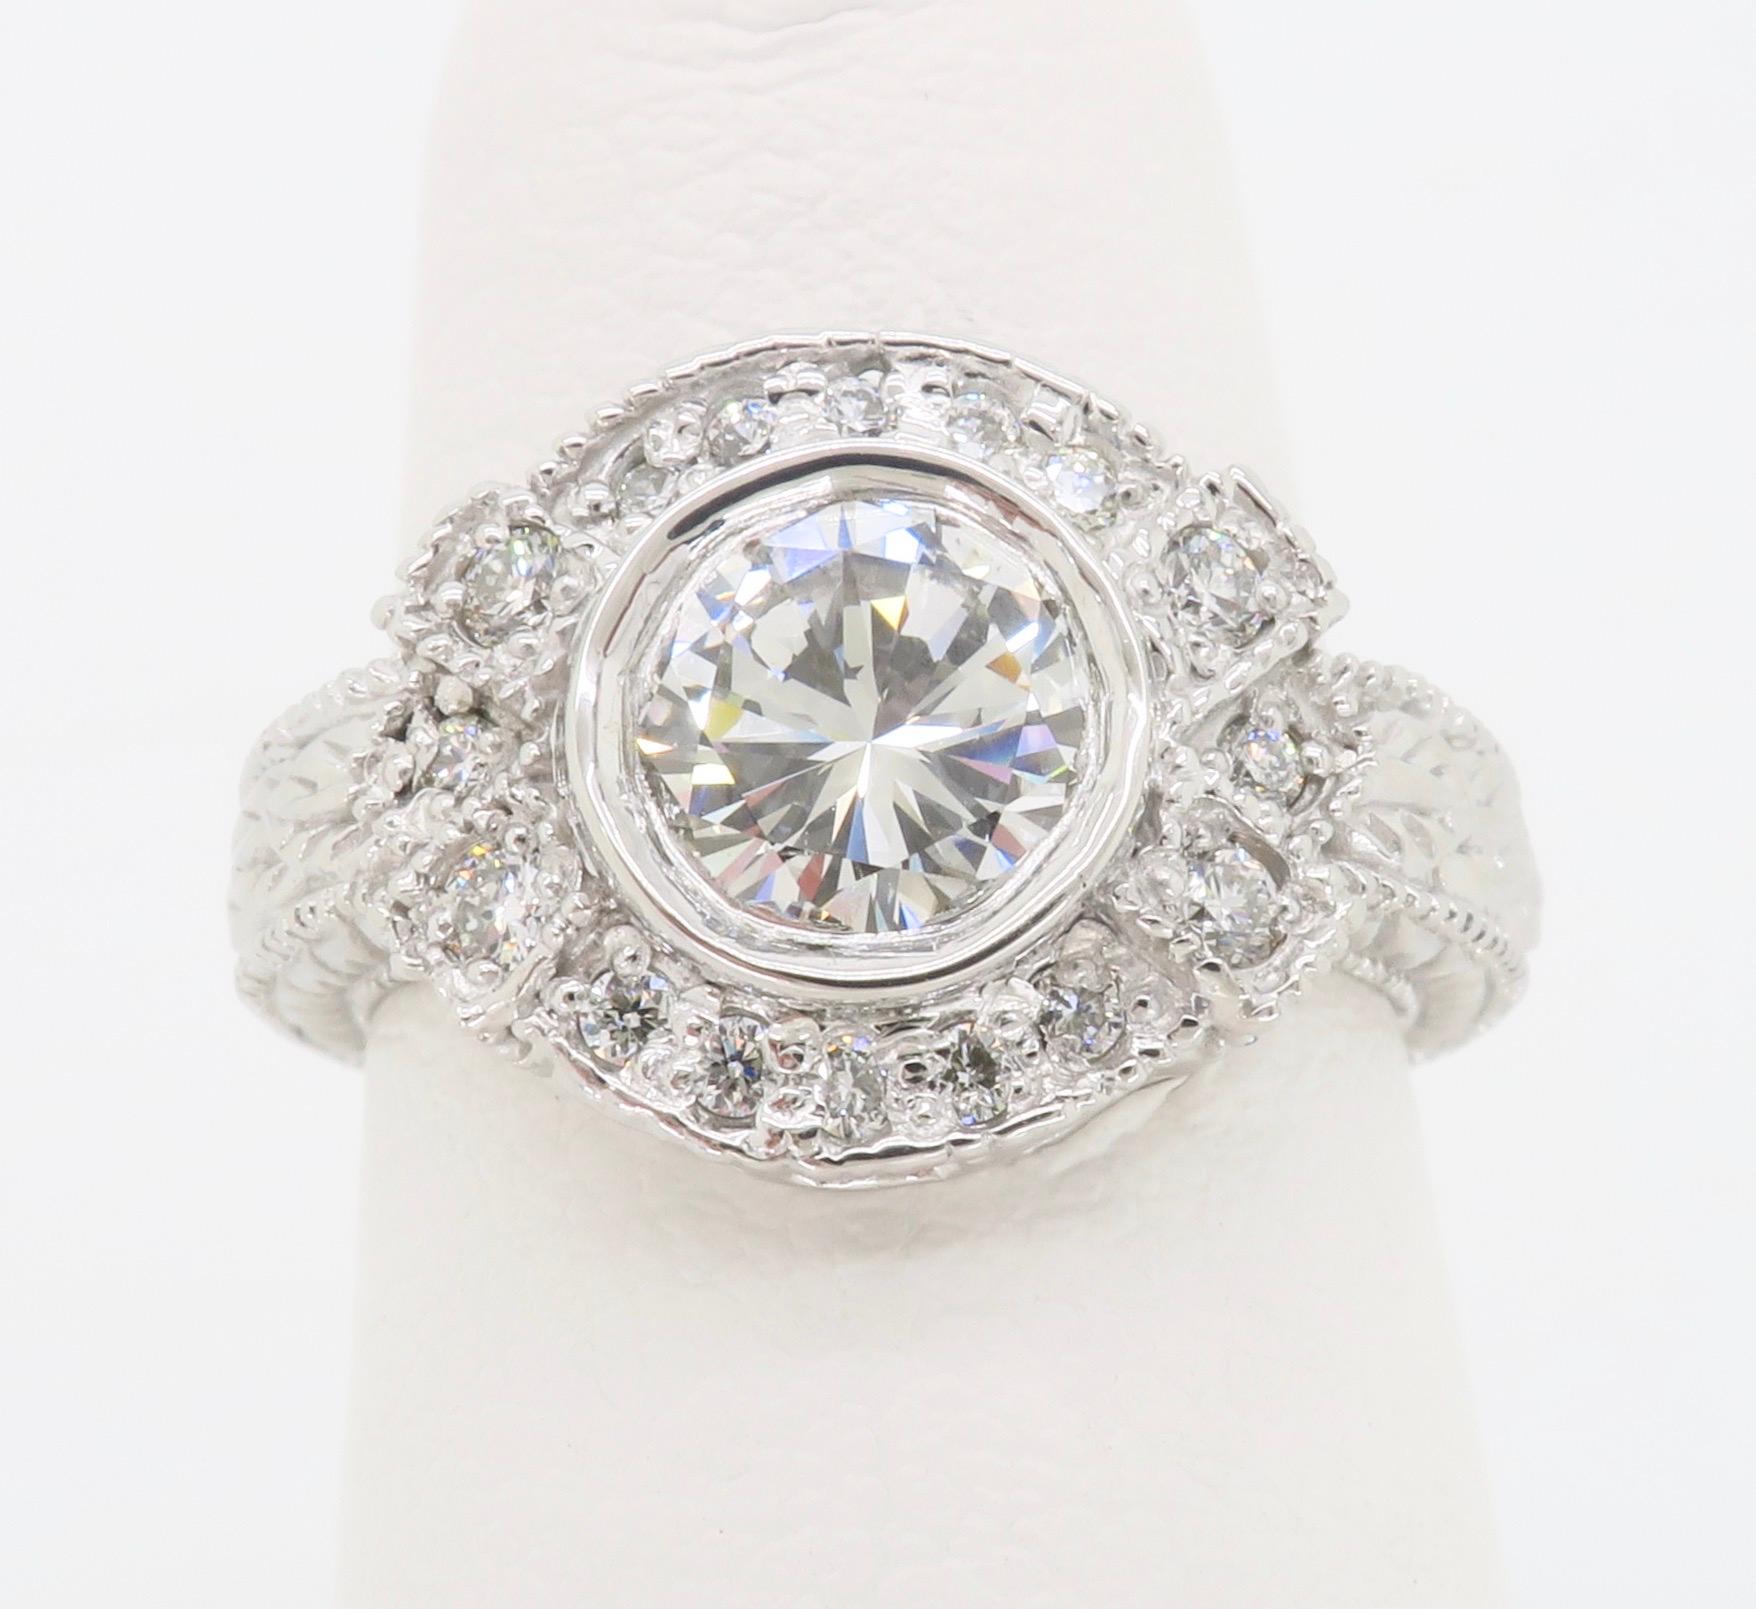 Vintage Inspired 1.27 Carat Diamond Ring Made in 14 Karat White Gold For Sale 6